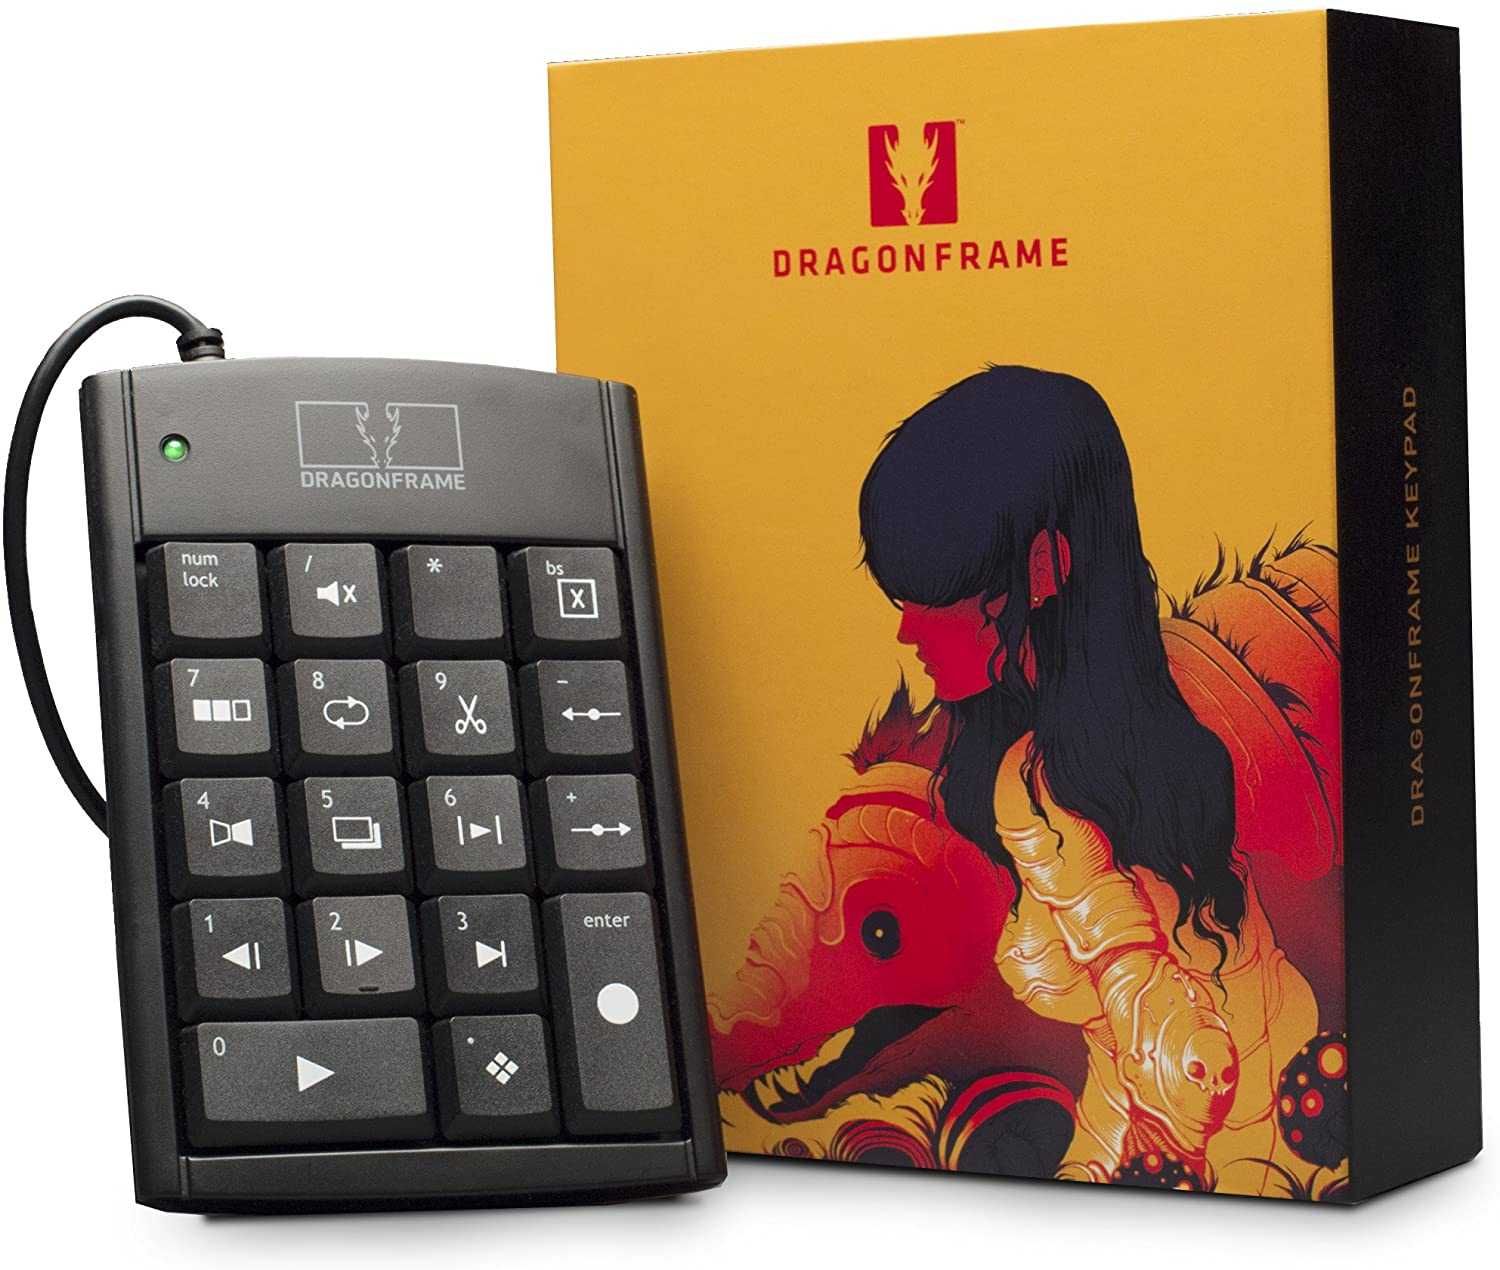 Software Dragonframe 4.2.4 + USB/Bluetooth controller